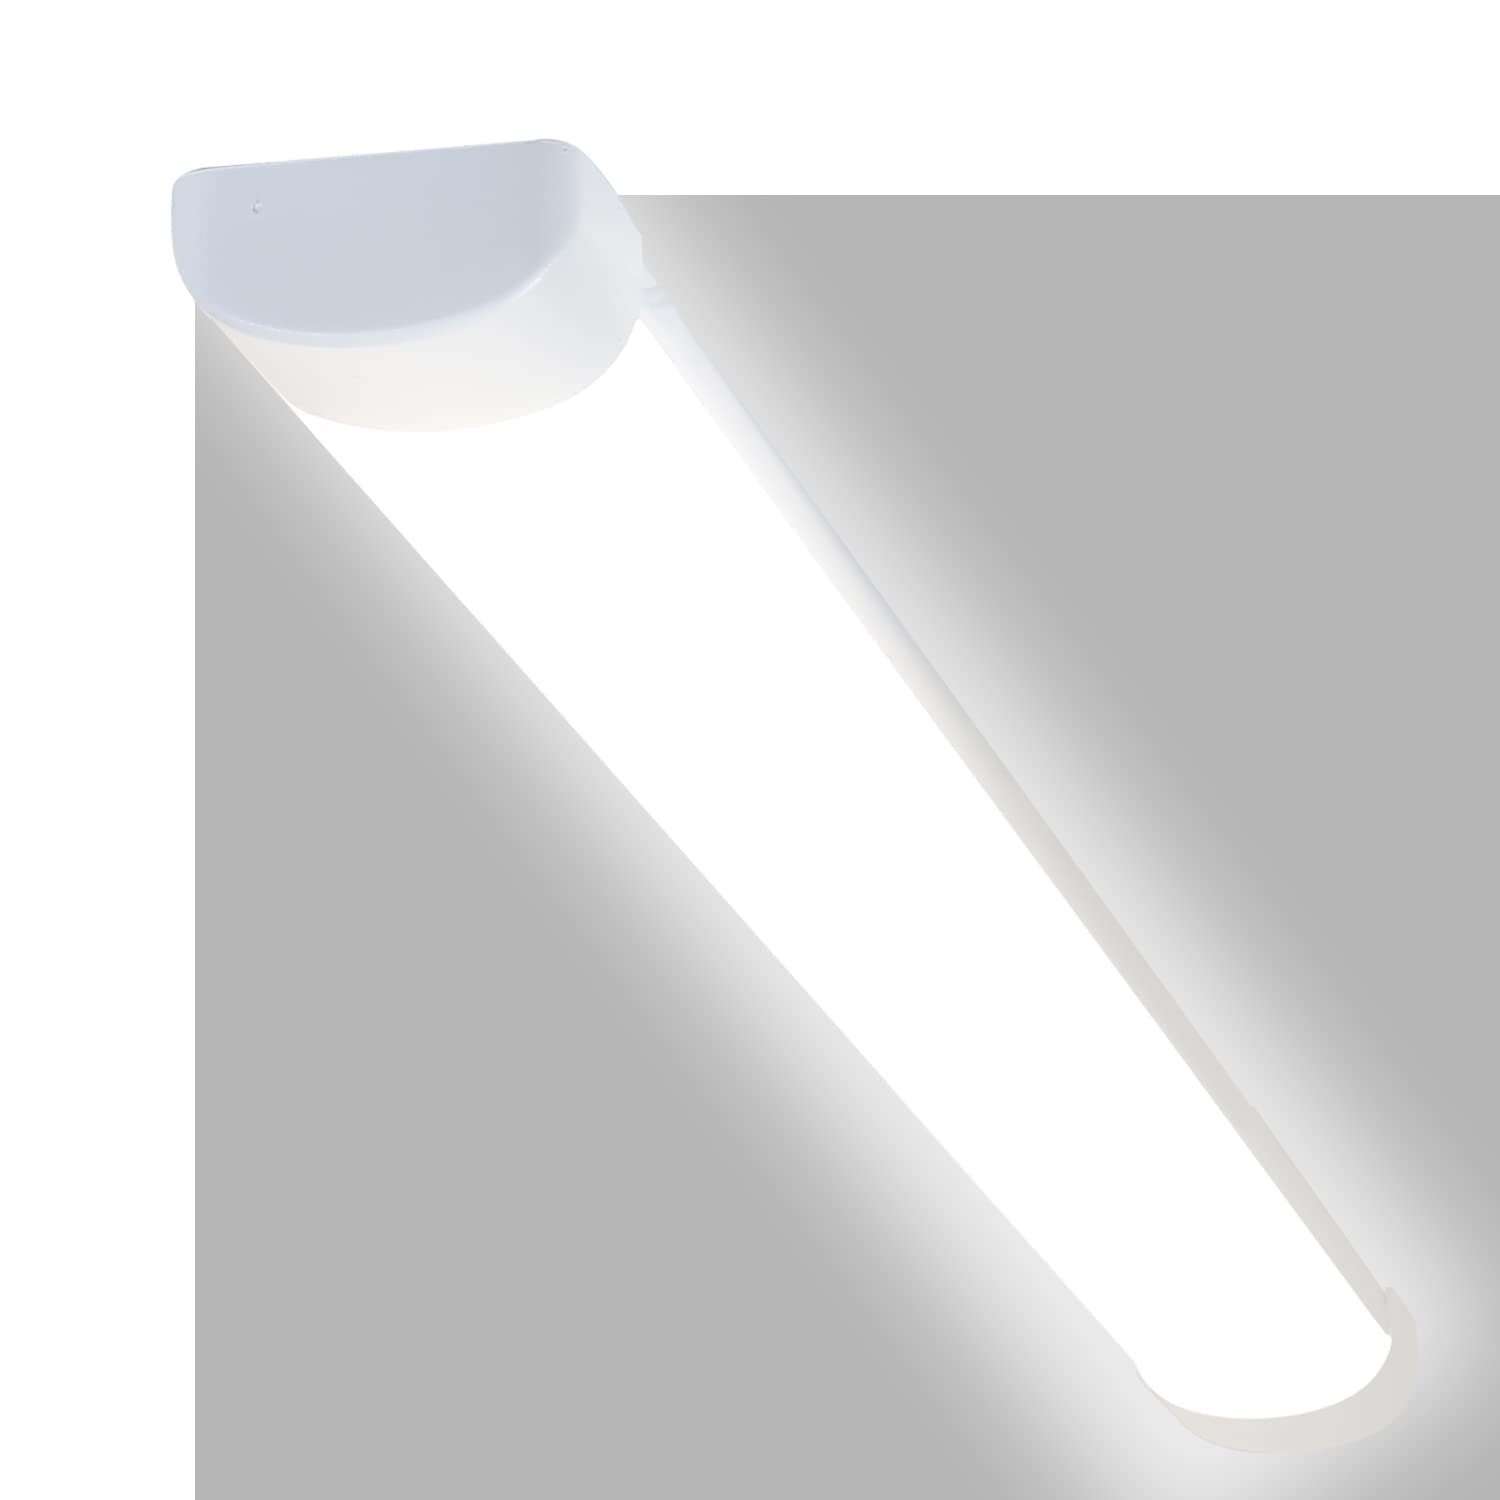 ZMH LED Deckenleuchte Kellerlampe Flach Neutralweiß Röhre, LED fest integriert, Kaltweiß, 24W, 2500lm B